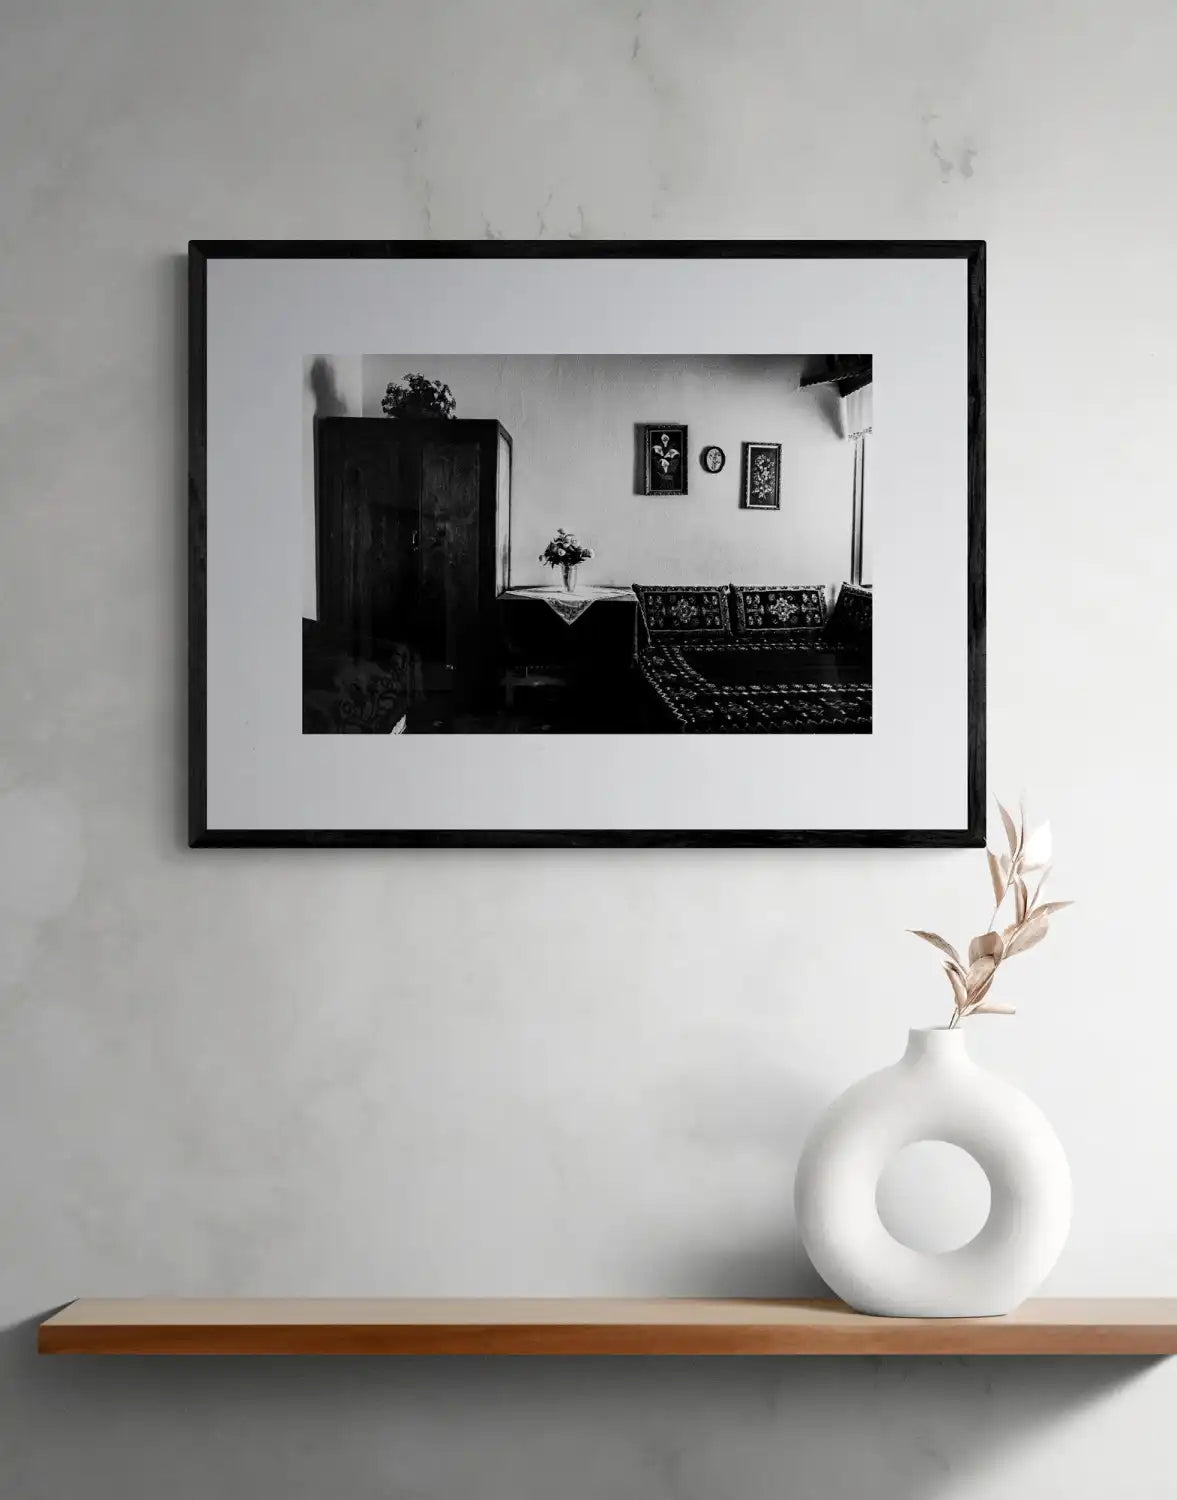 Metsovo, Epirus, Greece | House Interior | Black-and-White Wall Art Photography - single print framed